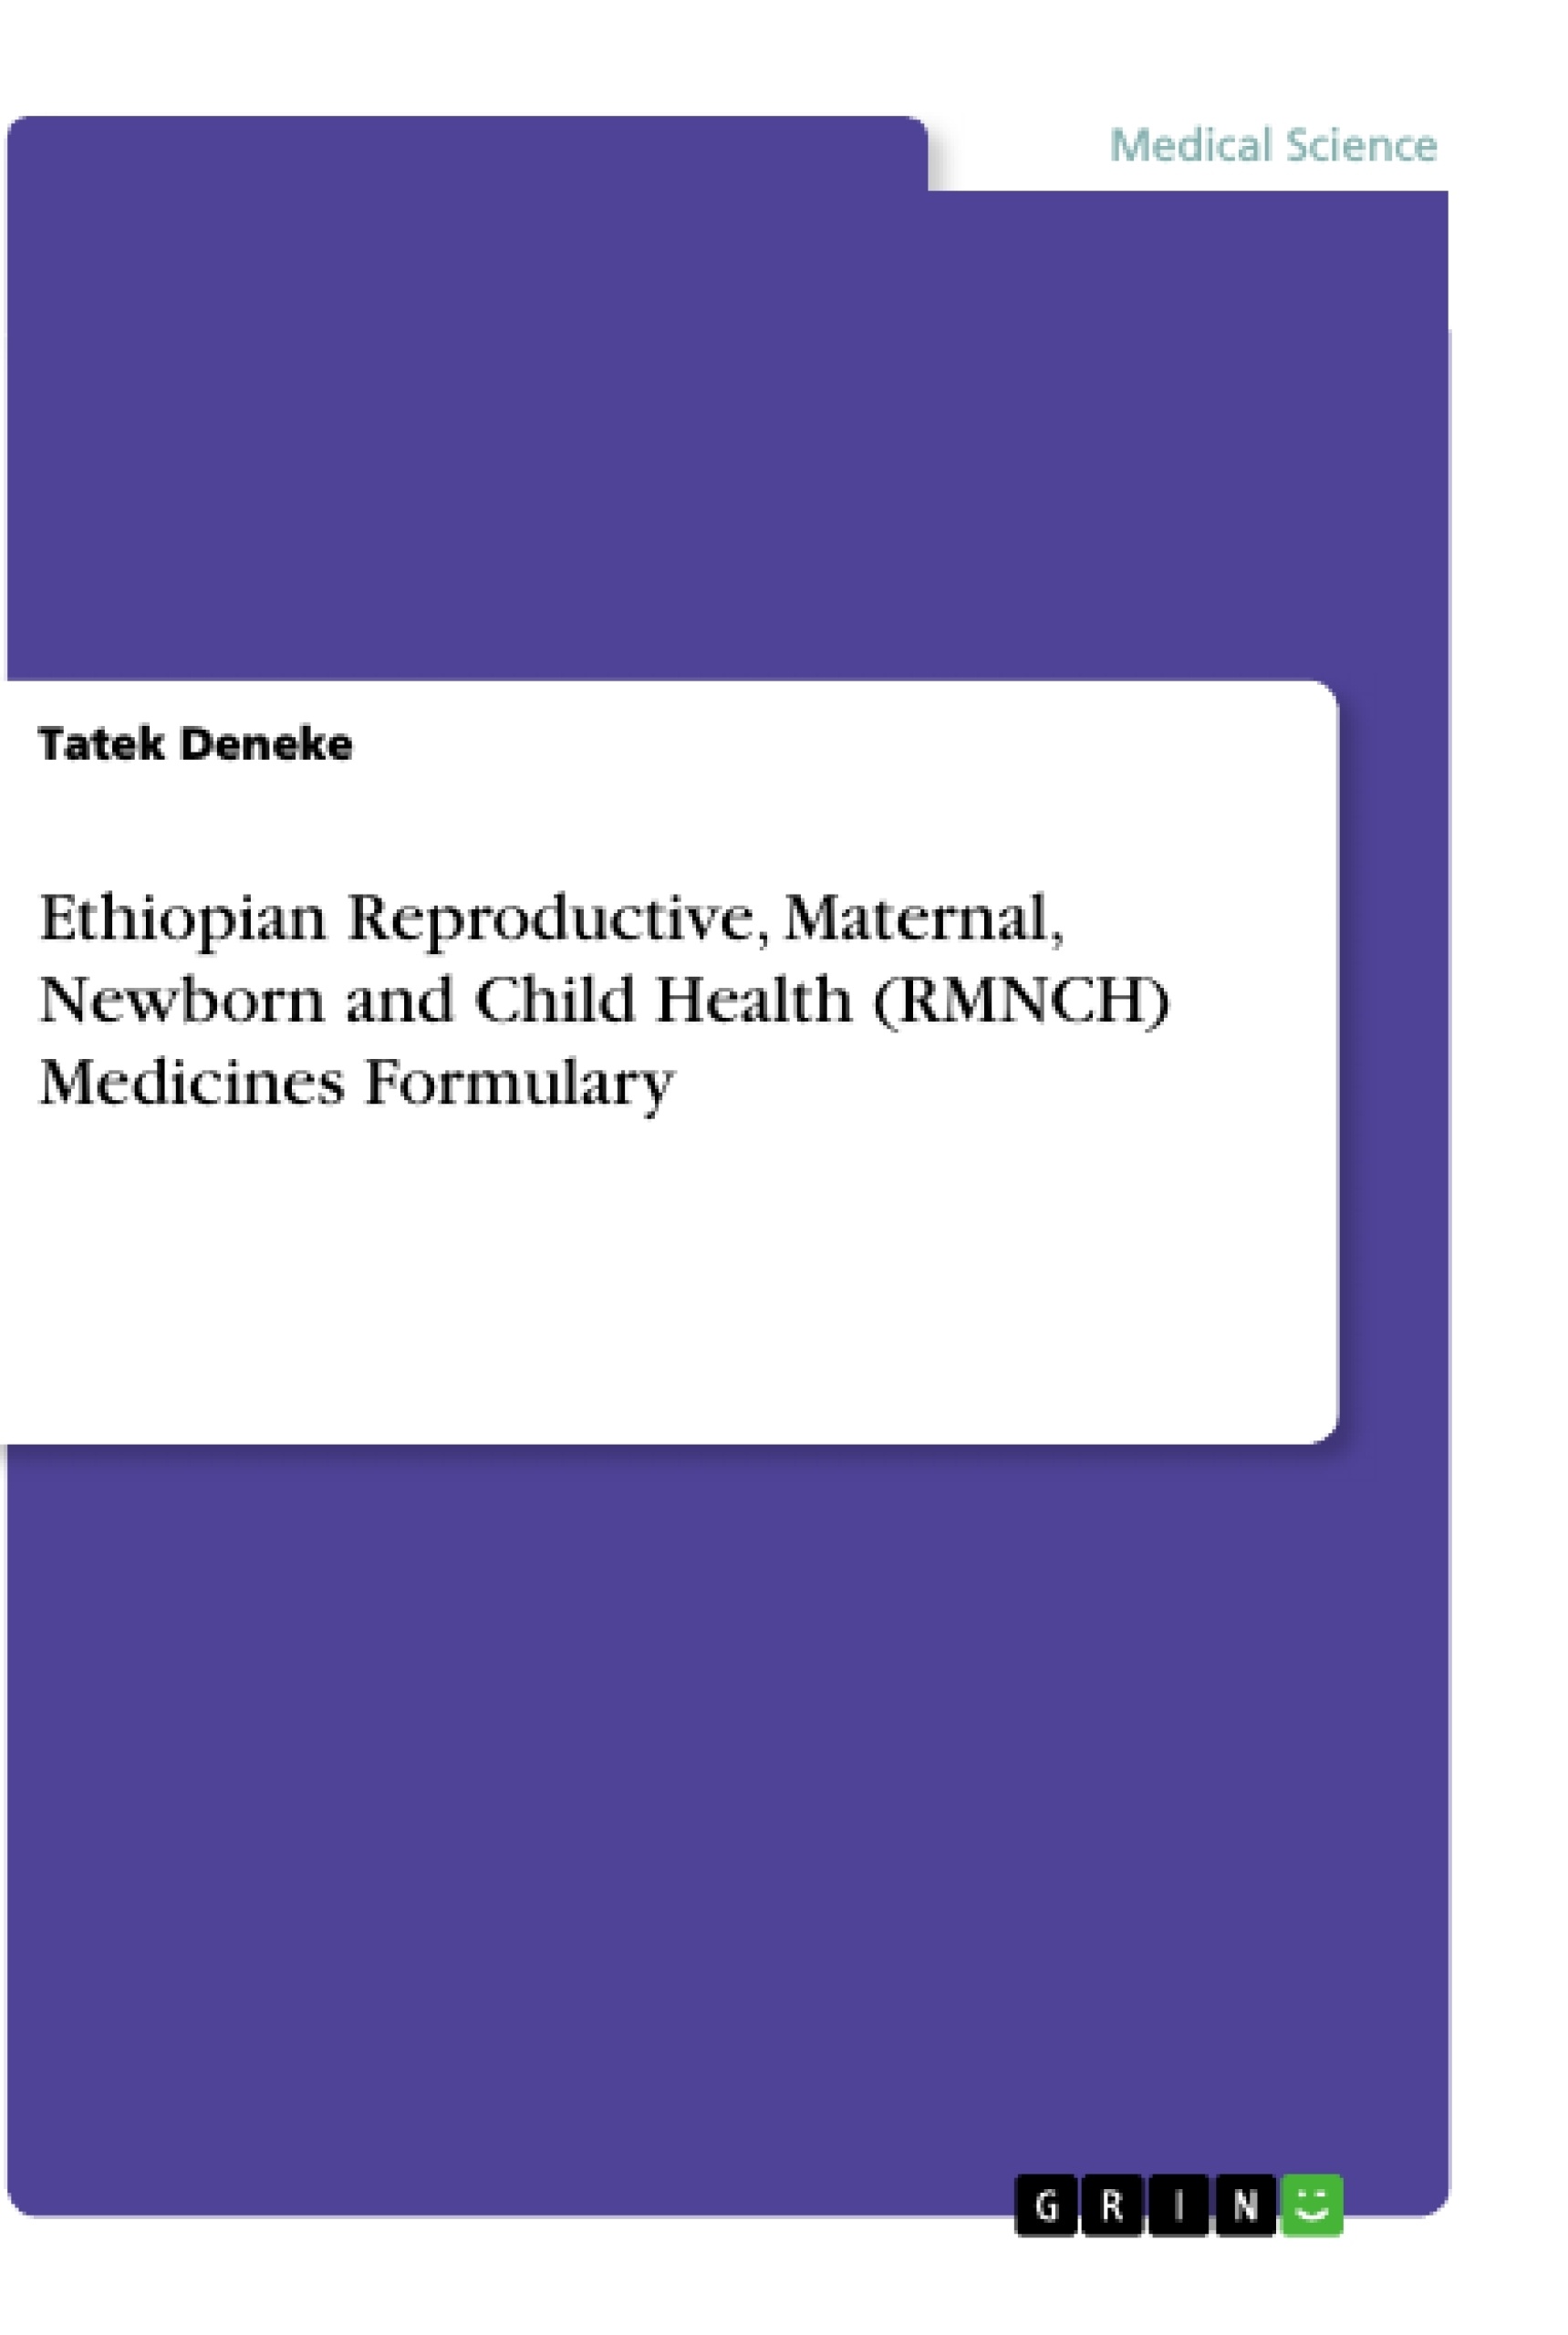 Titre: Ethiopian Reproductive, Maternal, Newborn and Child Health (RMNCH) Medicines Formulary